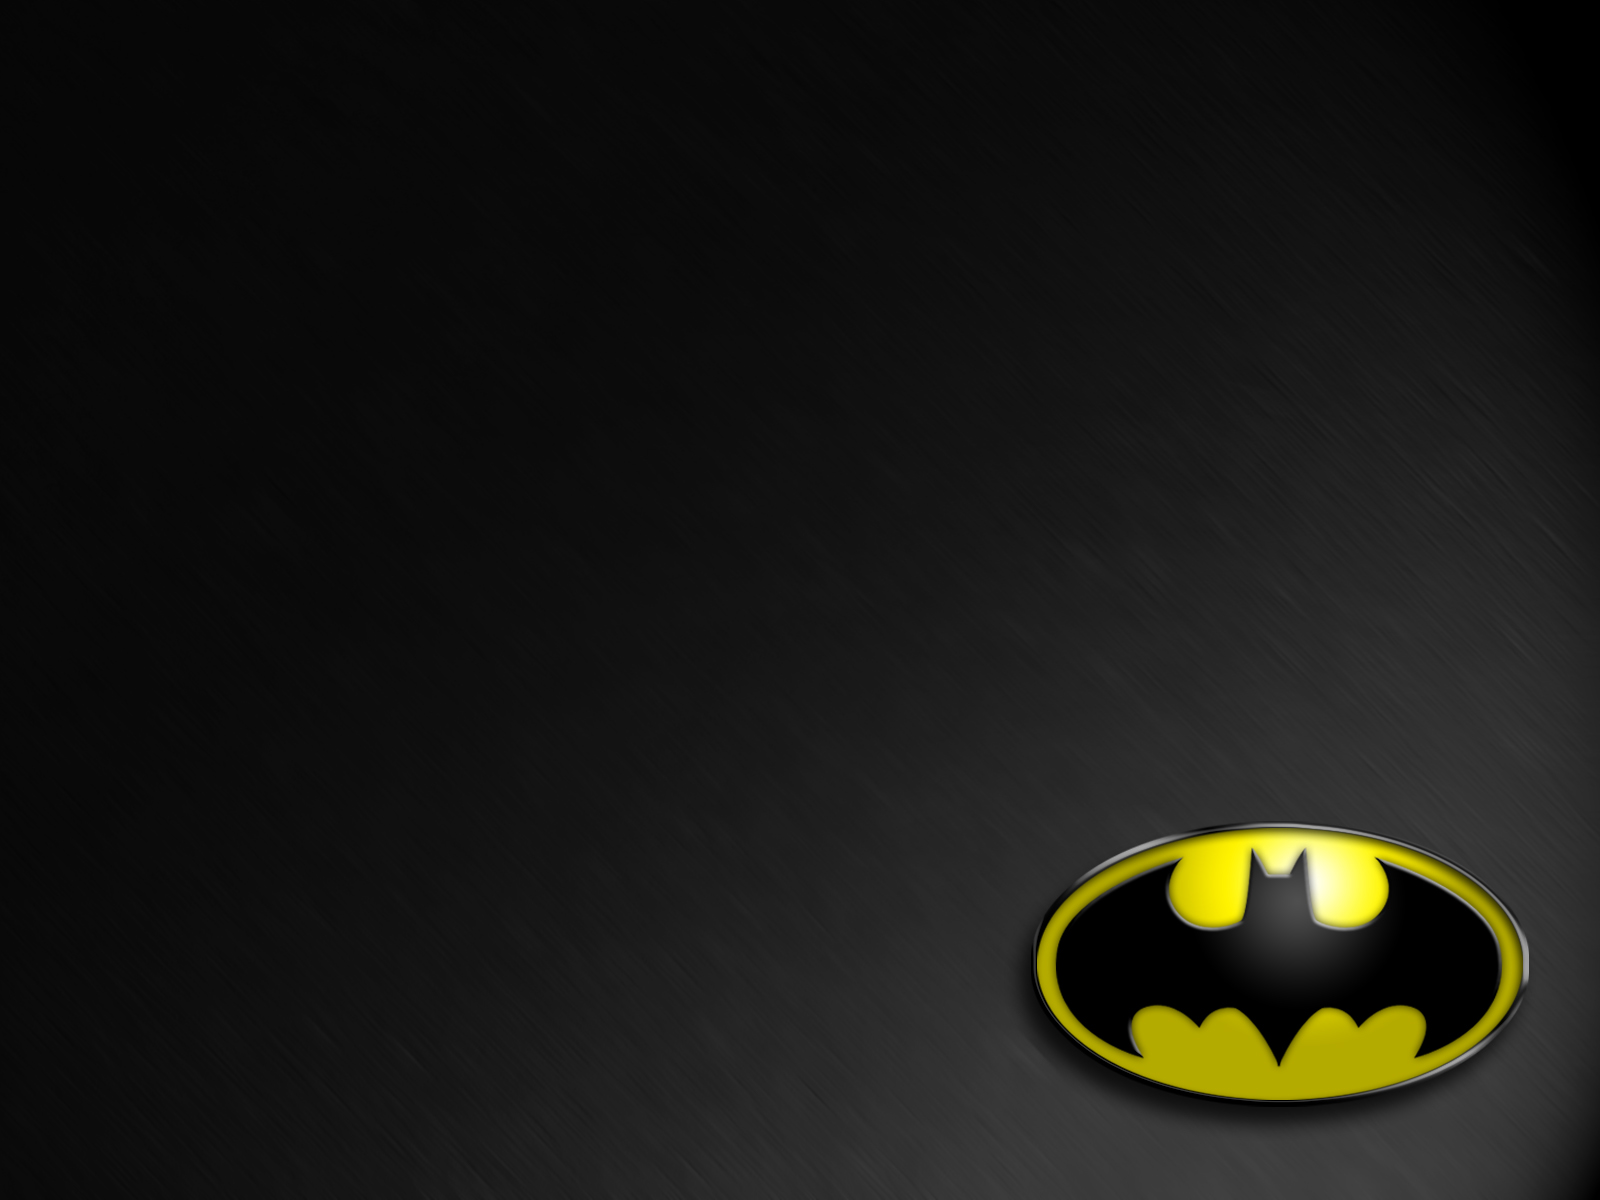 262899 Hintergrundbild herunterladen comics, the batman, batman logo, batman symbol - Bildschirmschoner und Bilder kostenlos